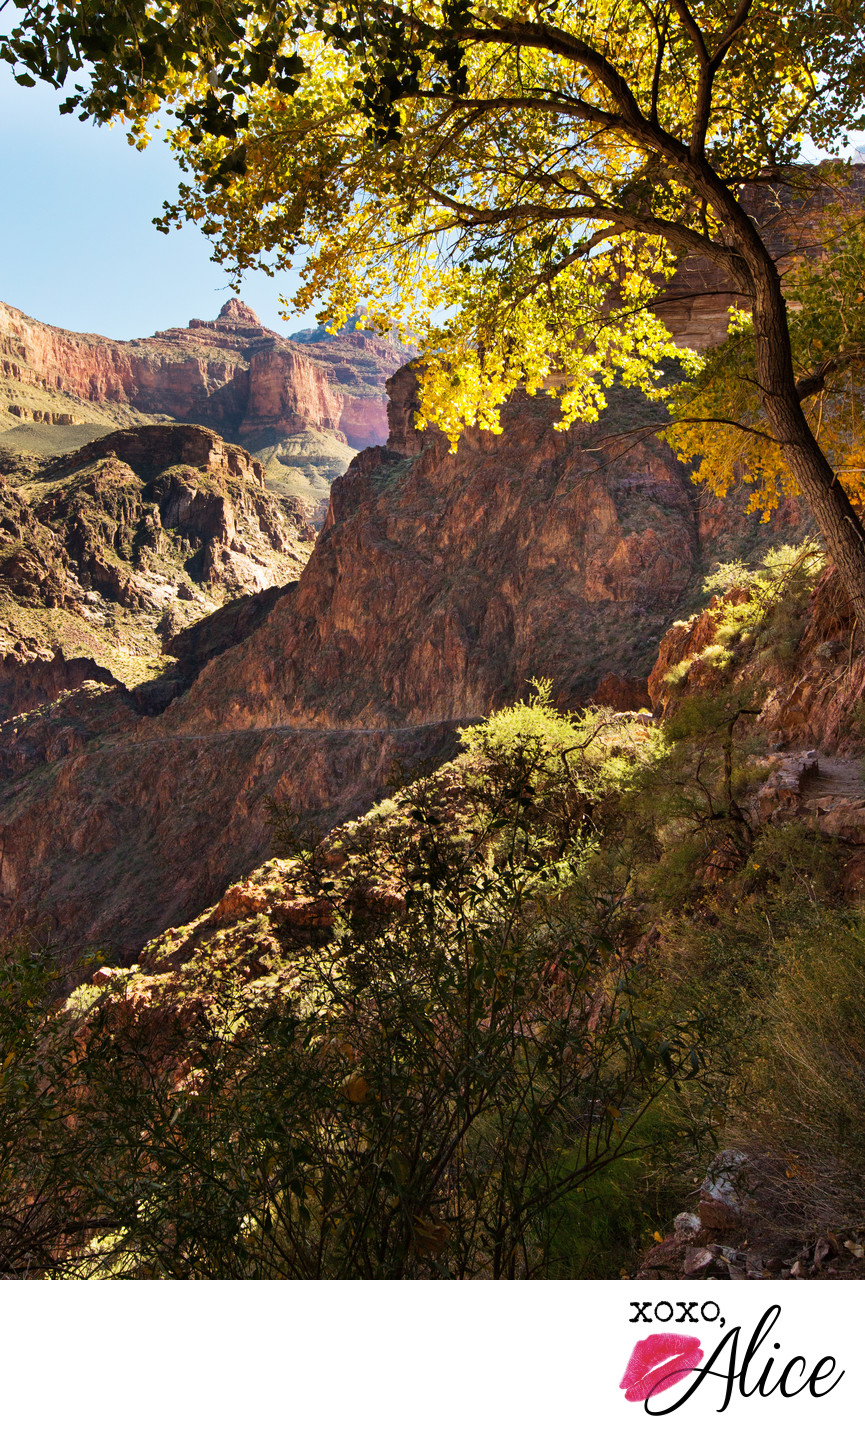 Indian Gardens in the Grand Canyon beautiful fall photo